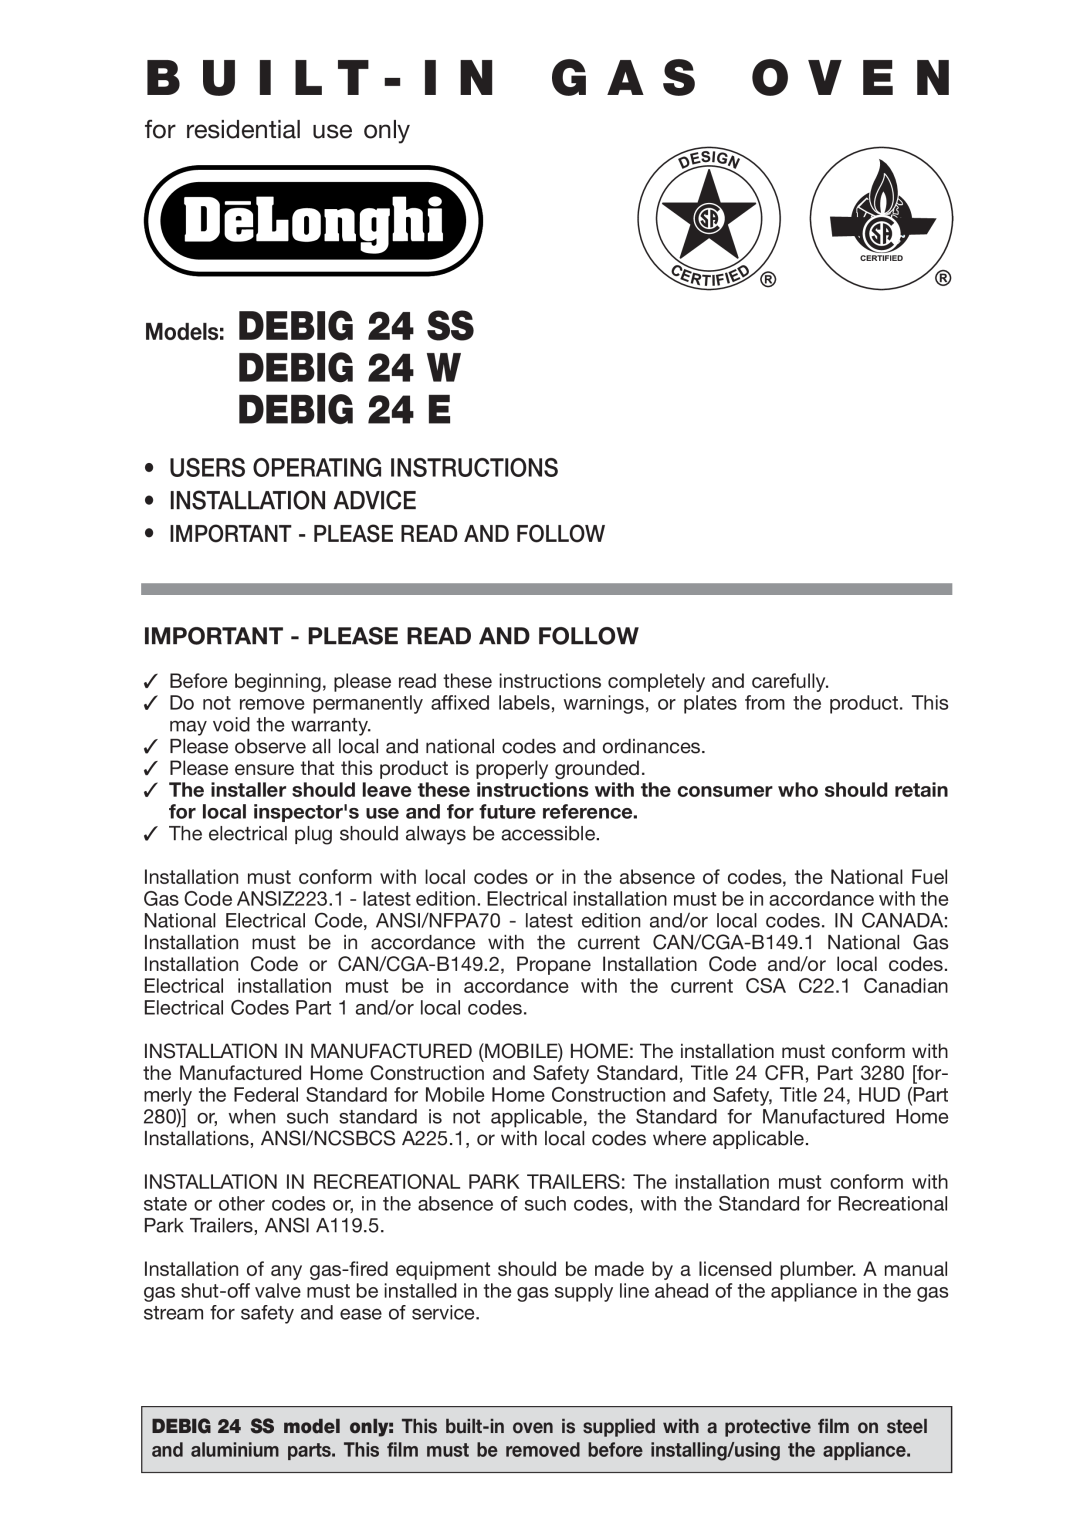 DeLonghi DEBIG 24 SS warranty Important - Please Read And Follow, B U I L T - I N G A S O V E N, for residential use only 